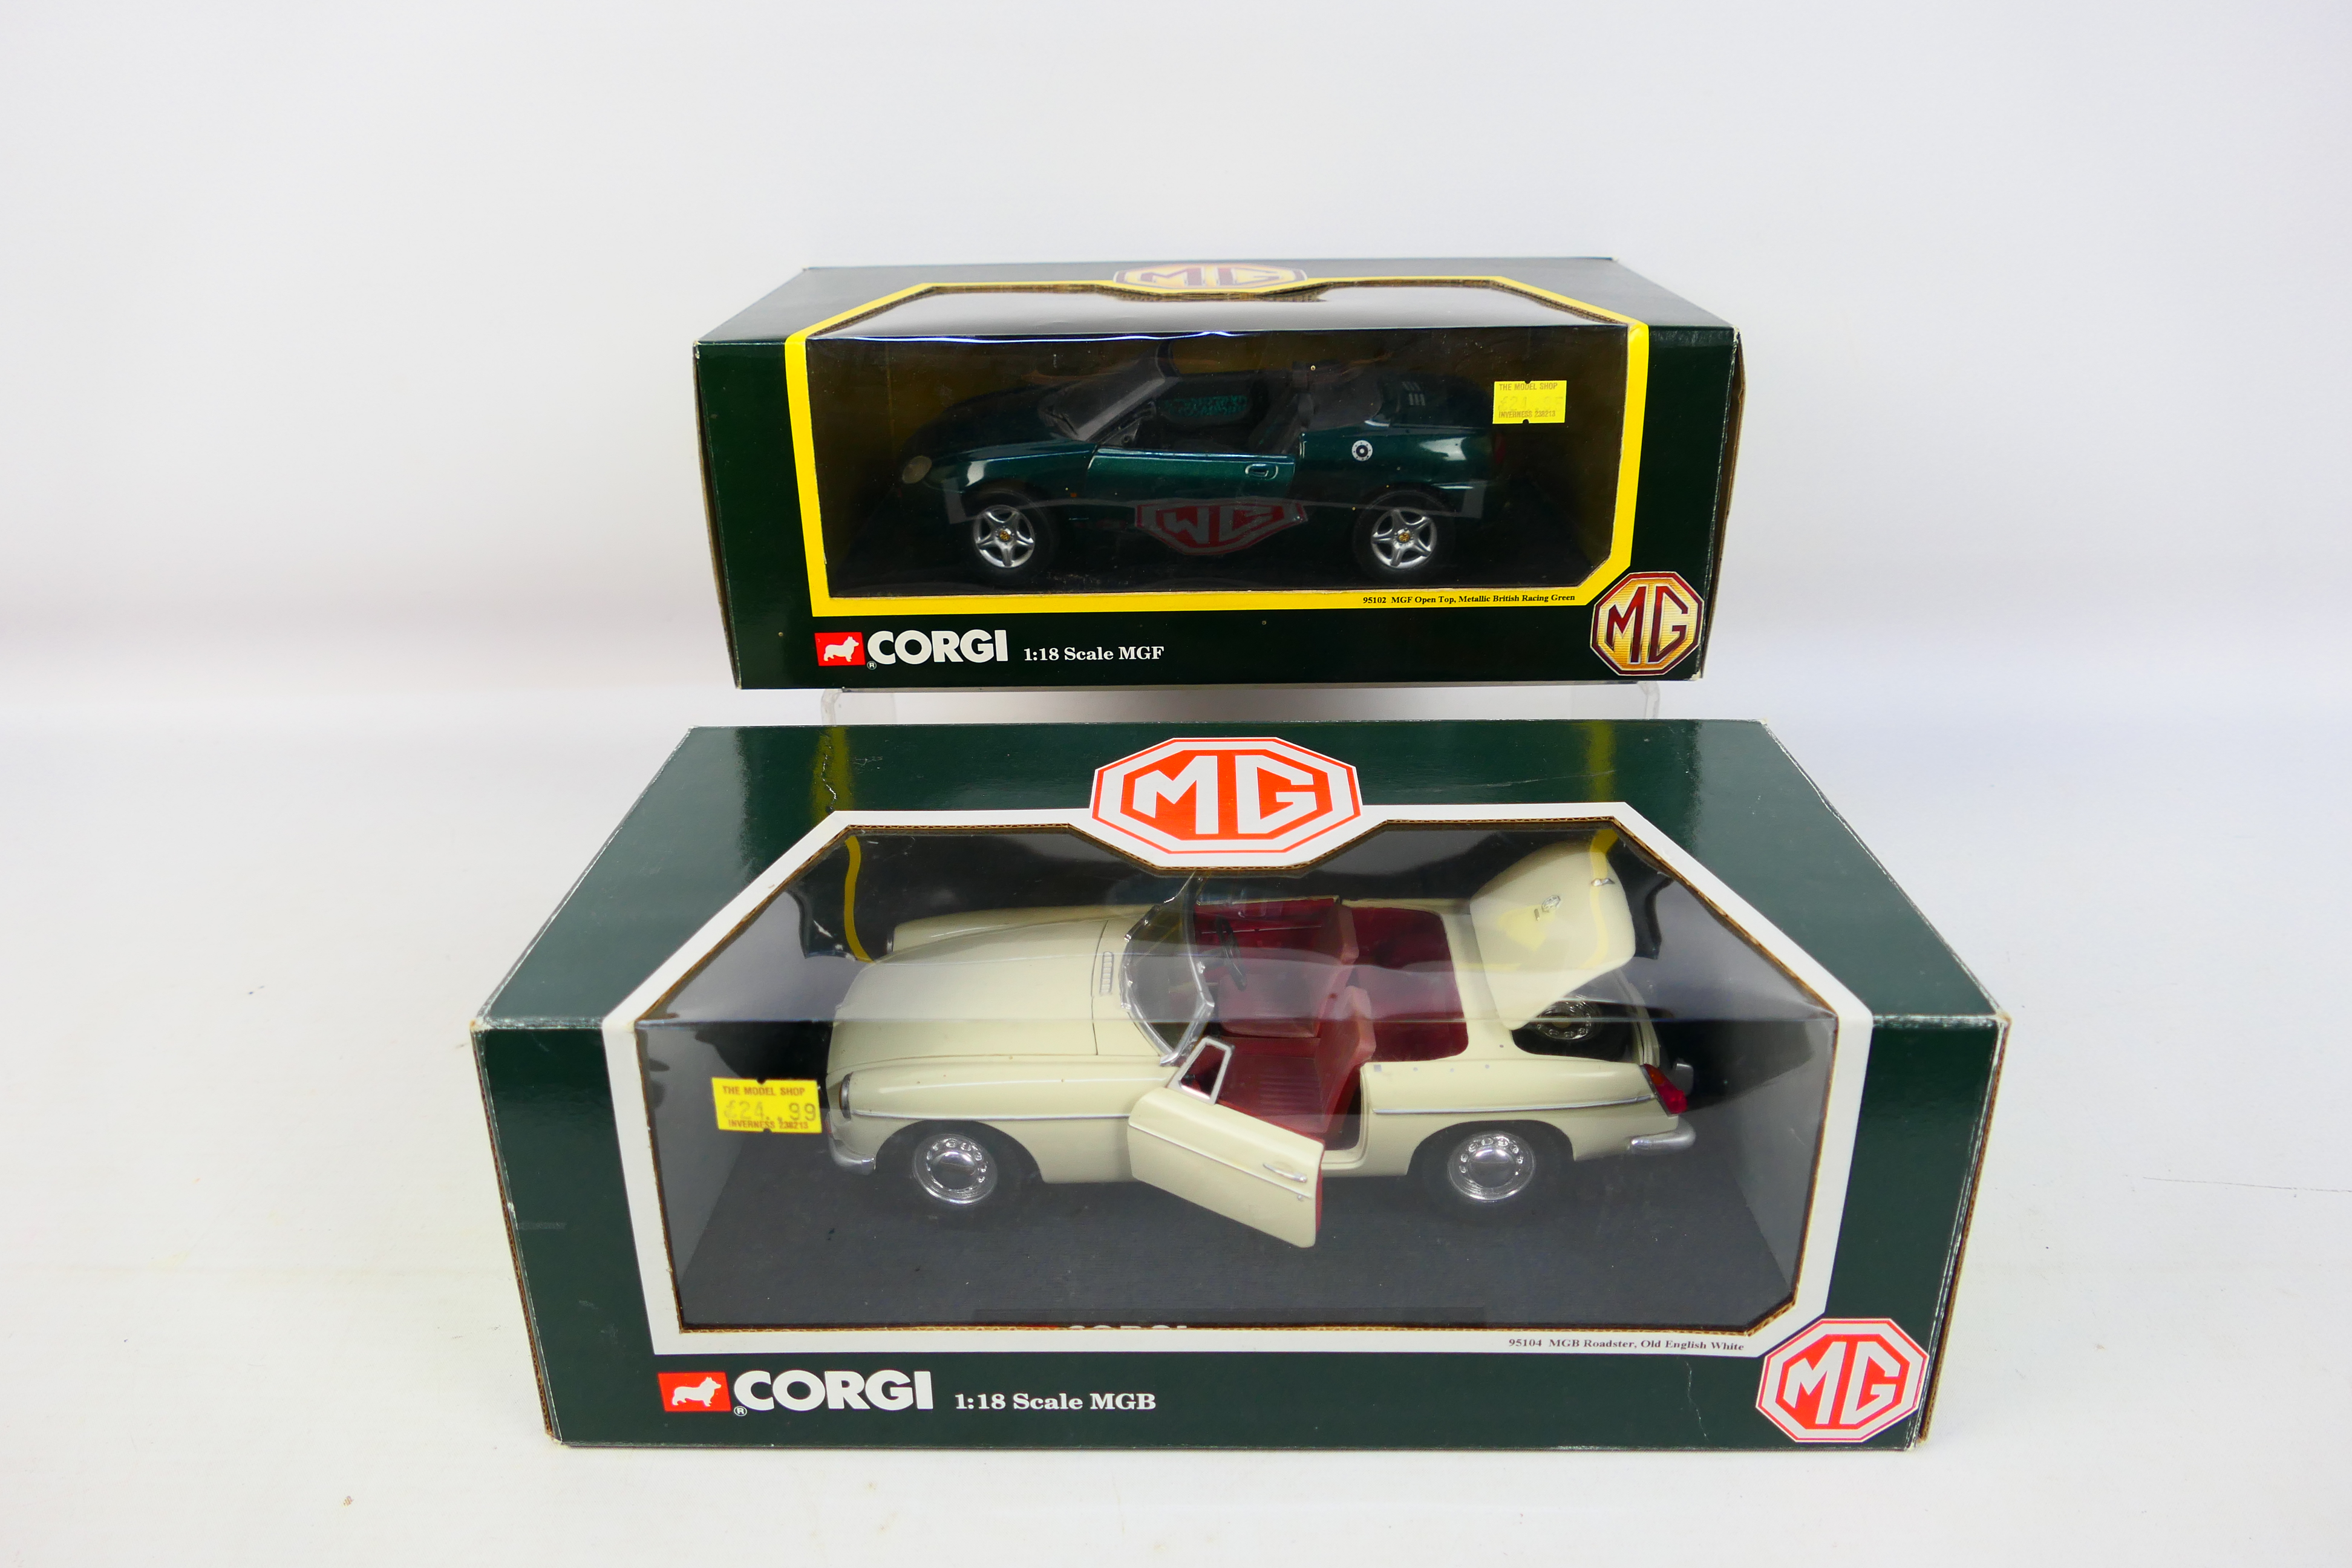 Corgi - Two boxed 1:18 scale diecast MG models. Lot consists of Corgi #95102 MGF 1.